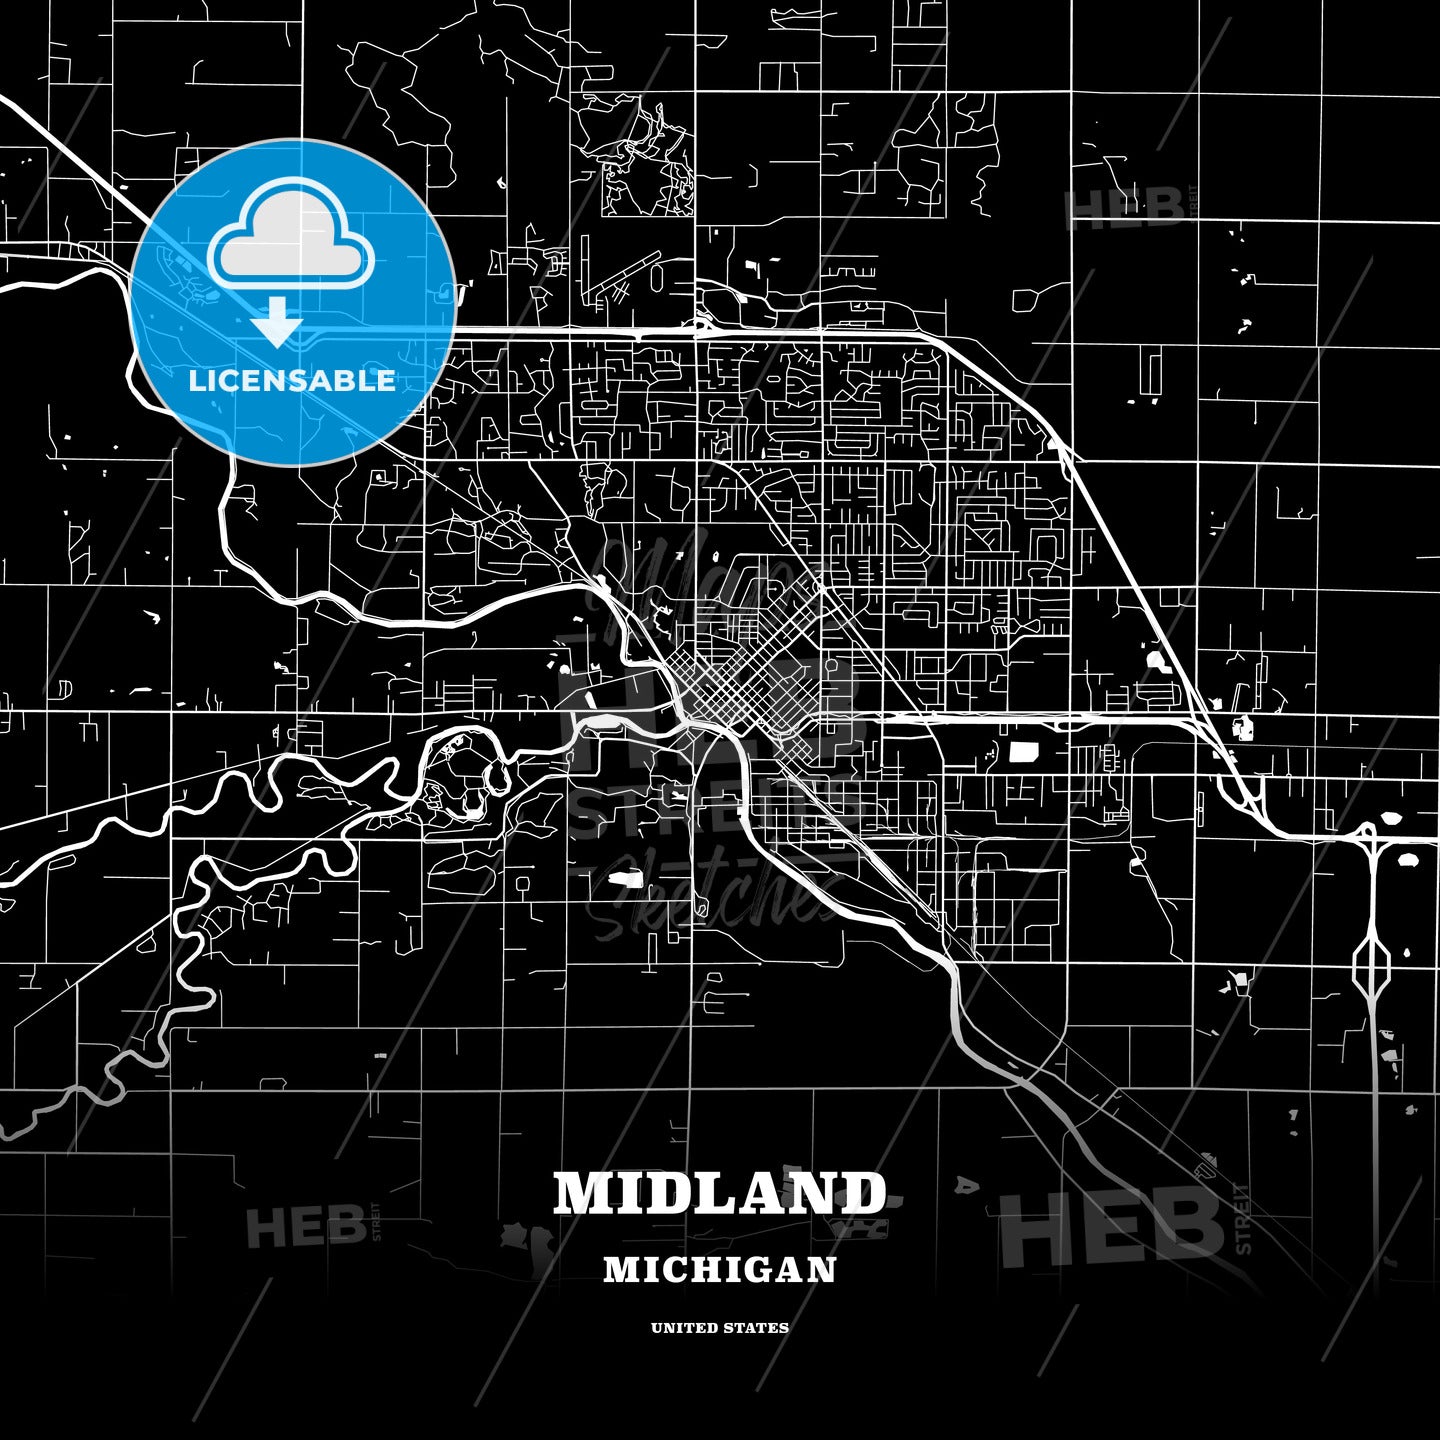 Midland, Michigan, USA map